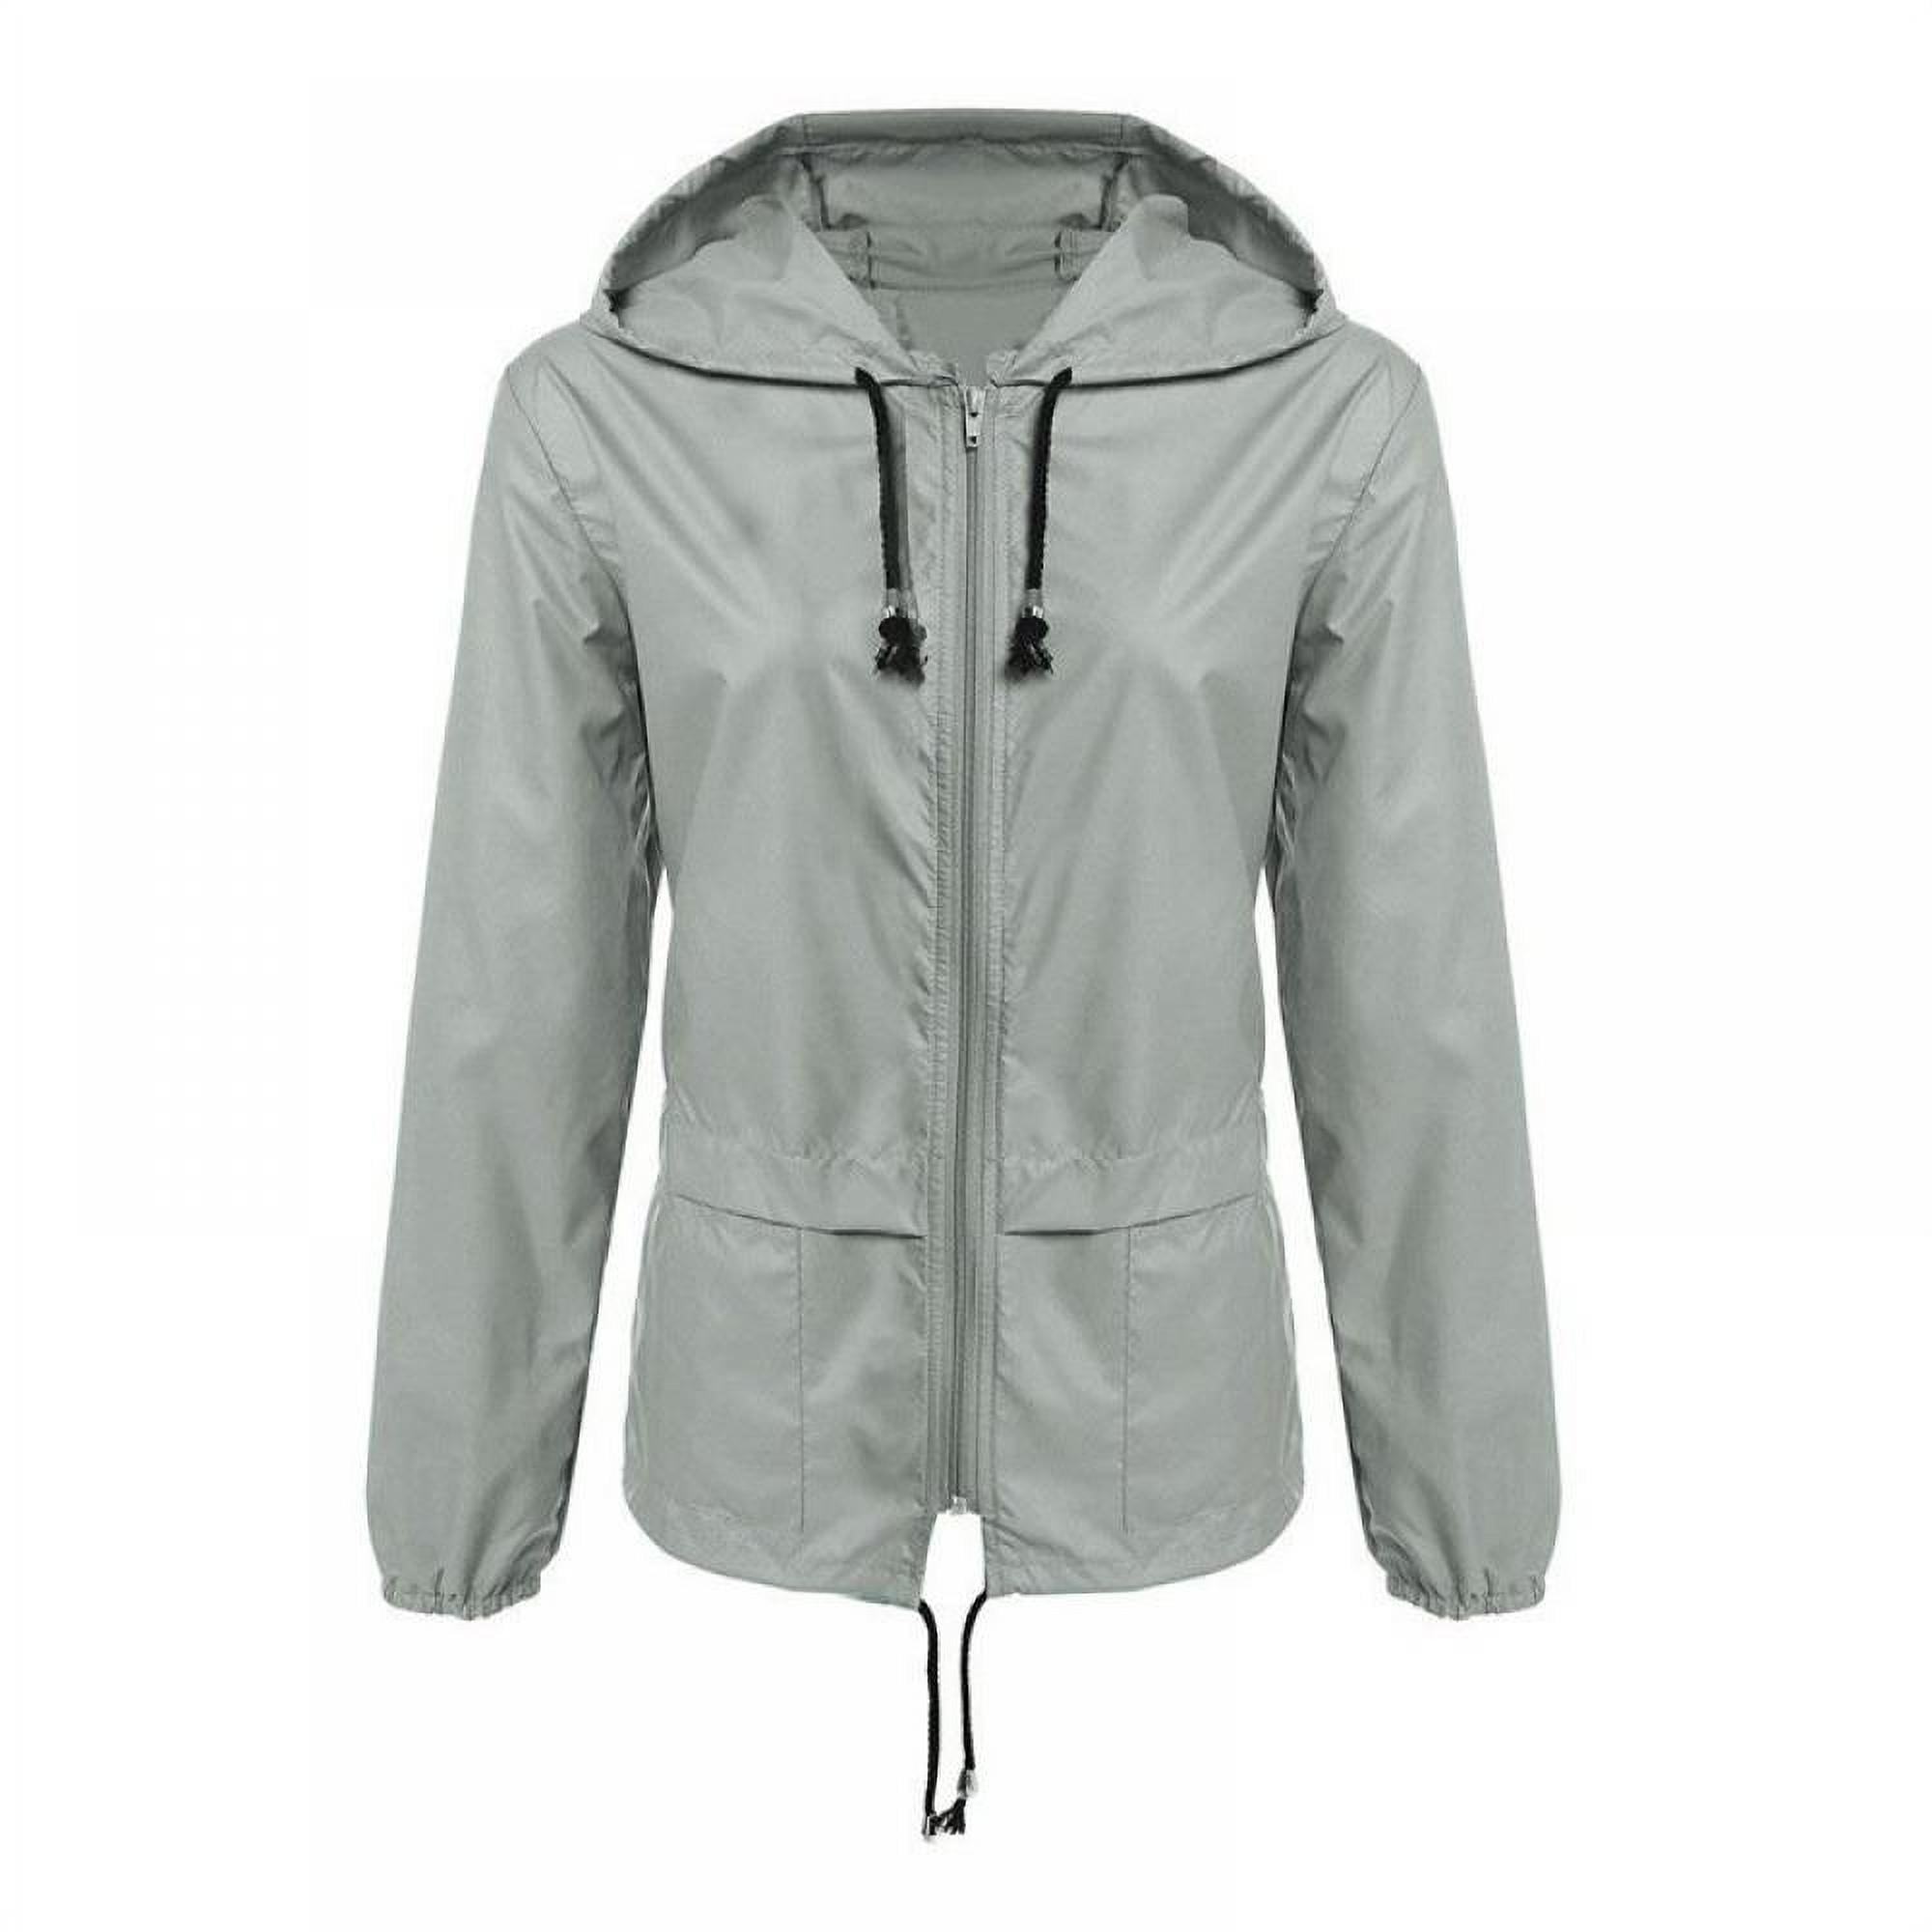 Women's Waterproof Spring Jacket Zipper Fully Taped Seams Rain Coat ...